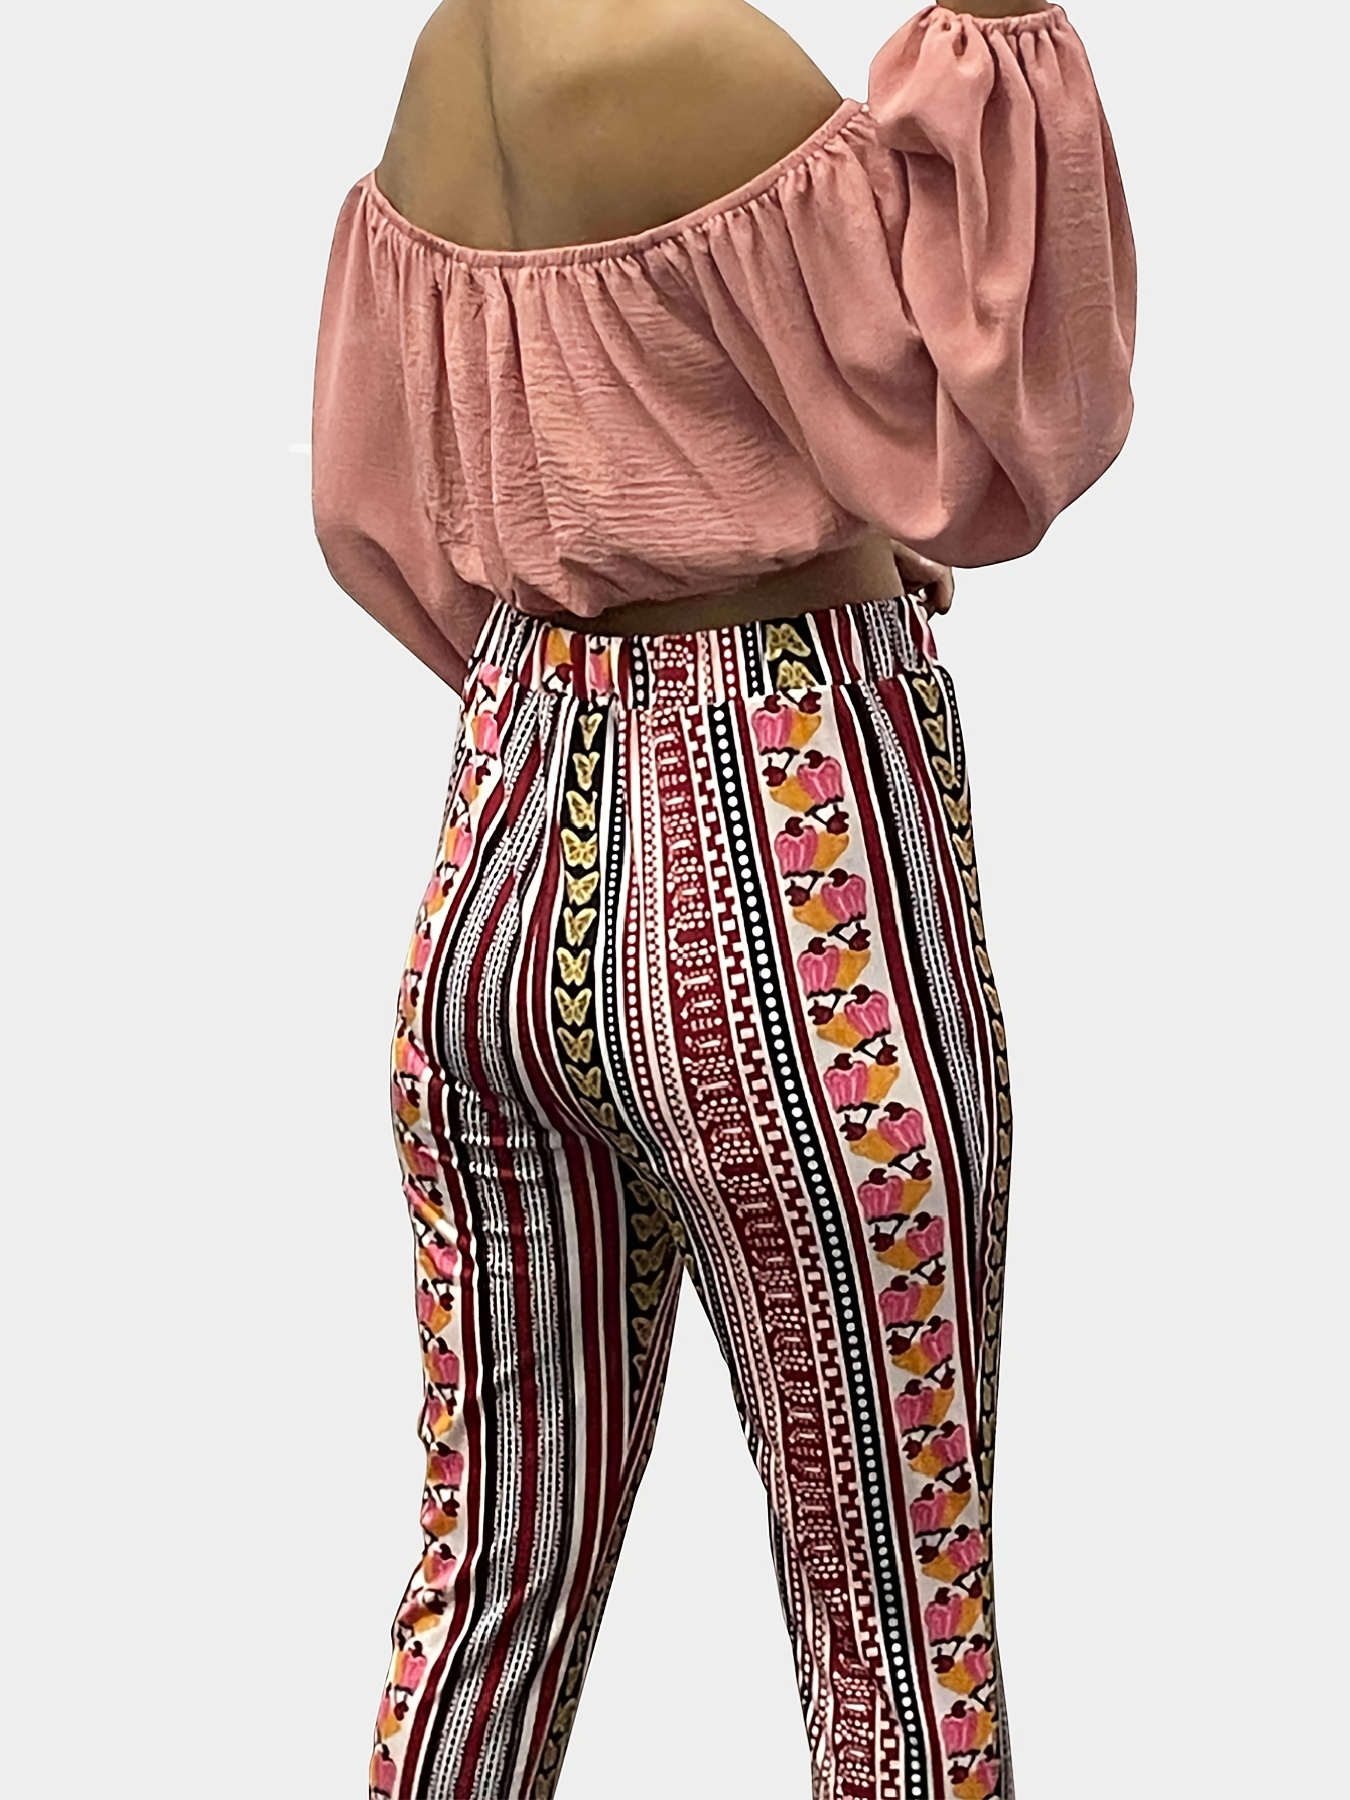 Casual Two-piece Pants Set, Crop Halter Top & Floral Print Wide Leg Pants  Outfits, Women's Clothing